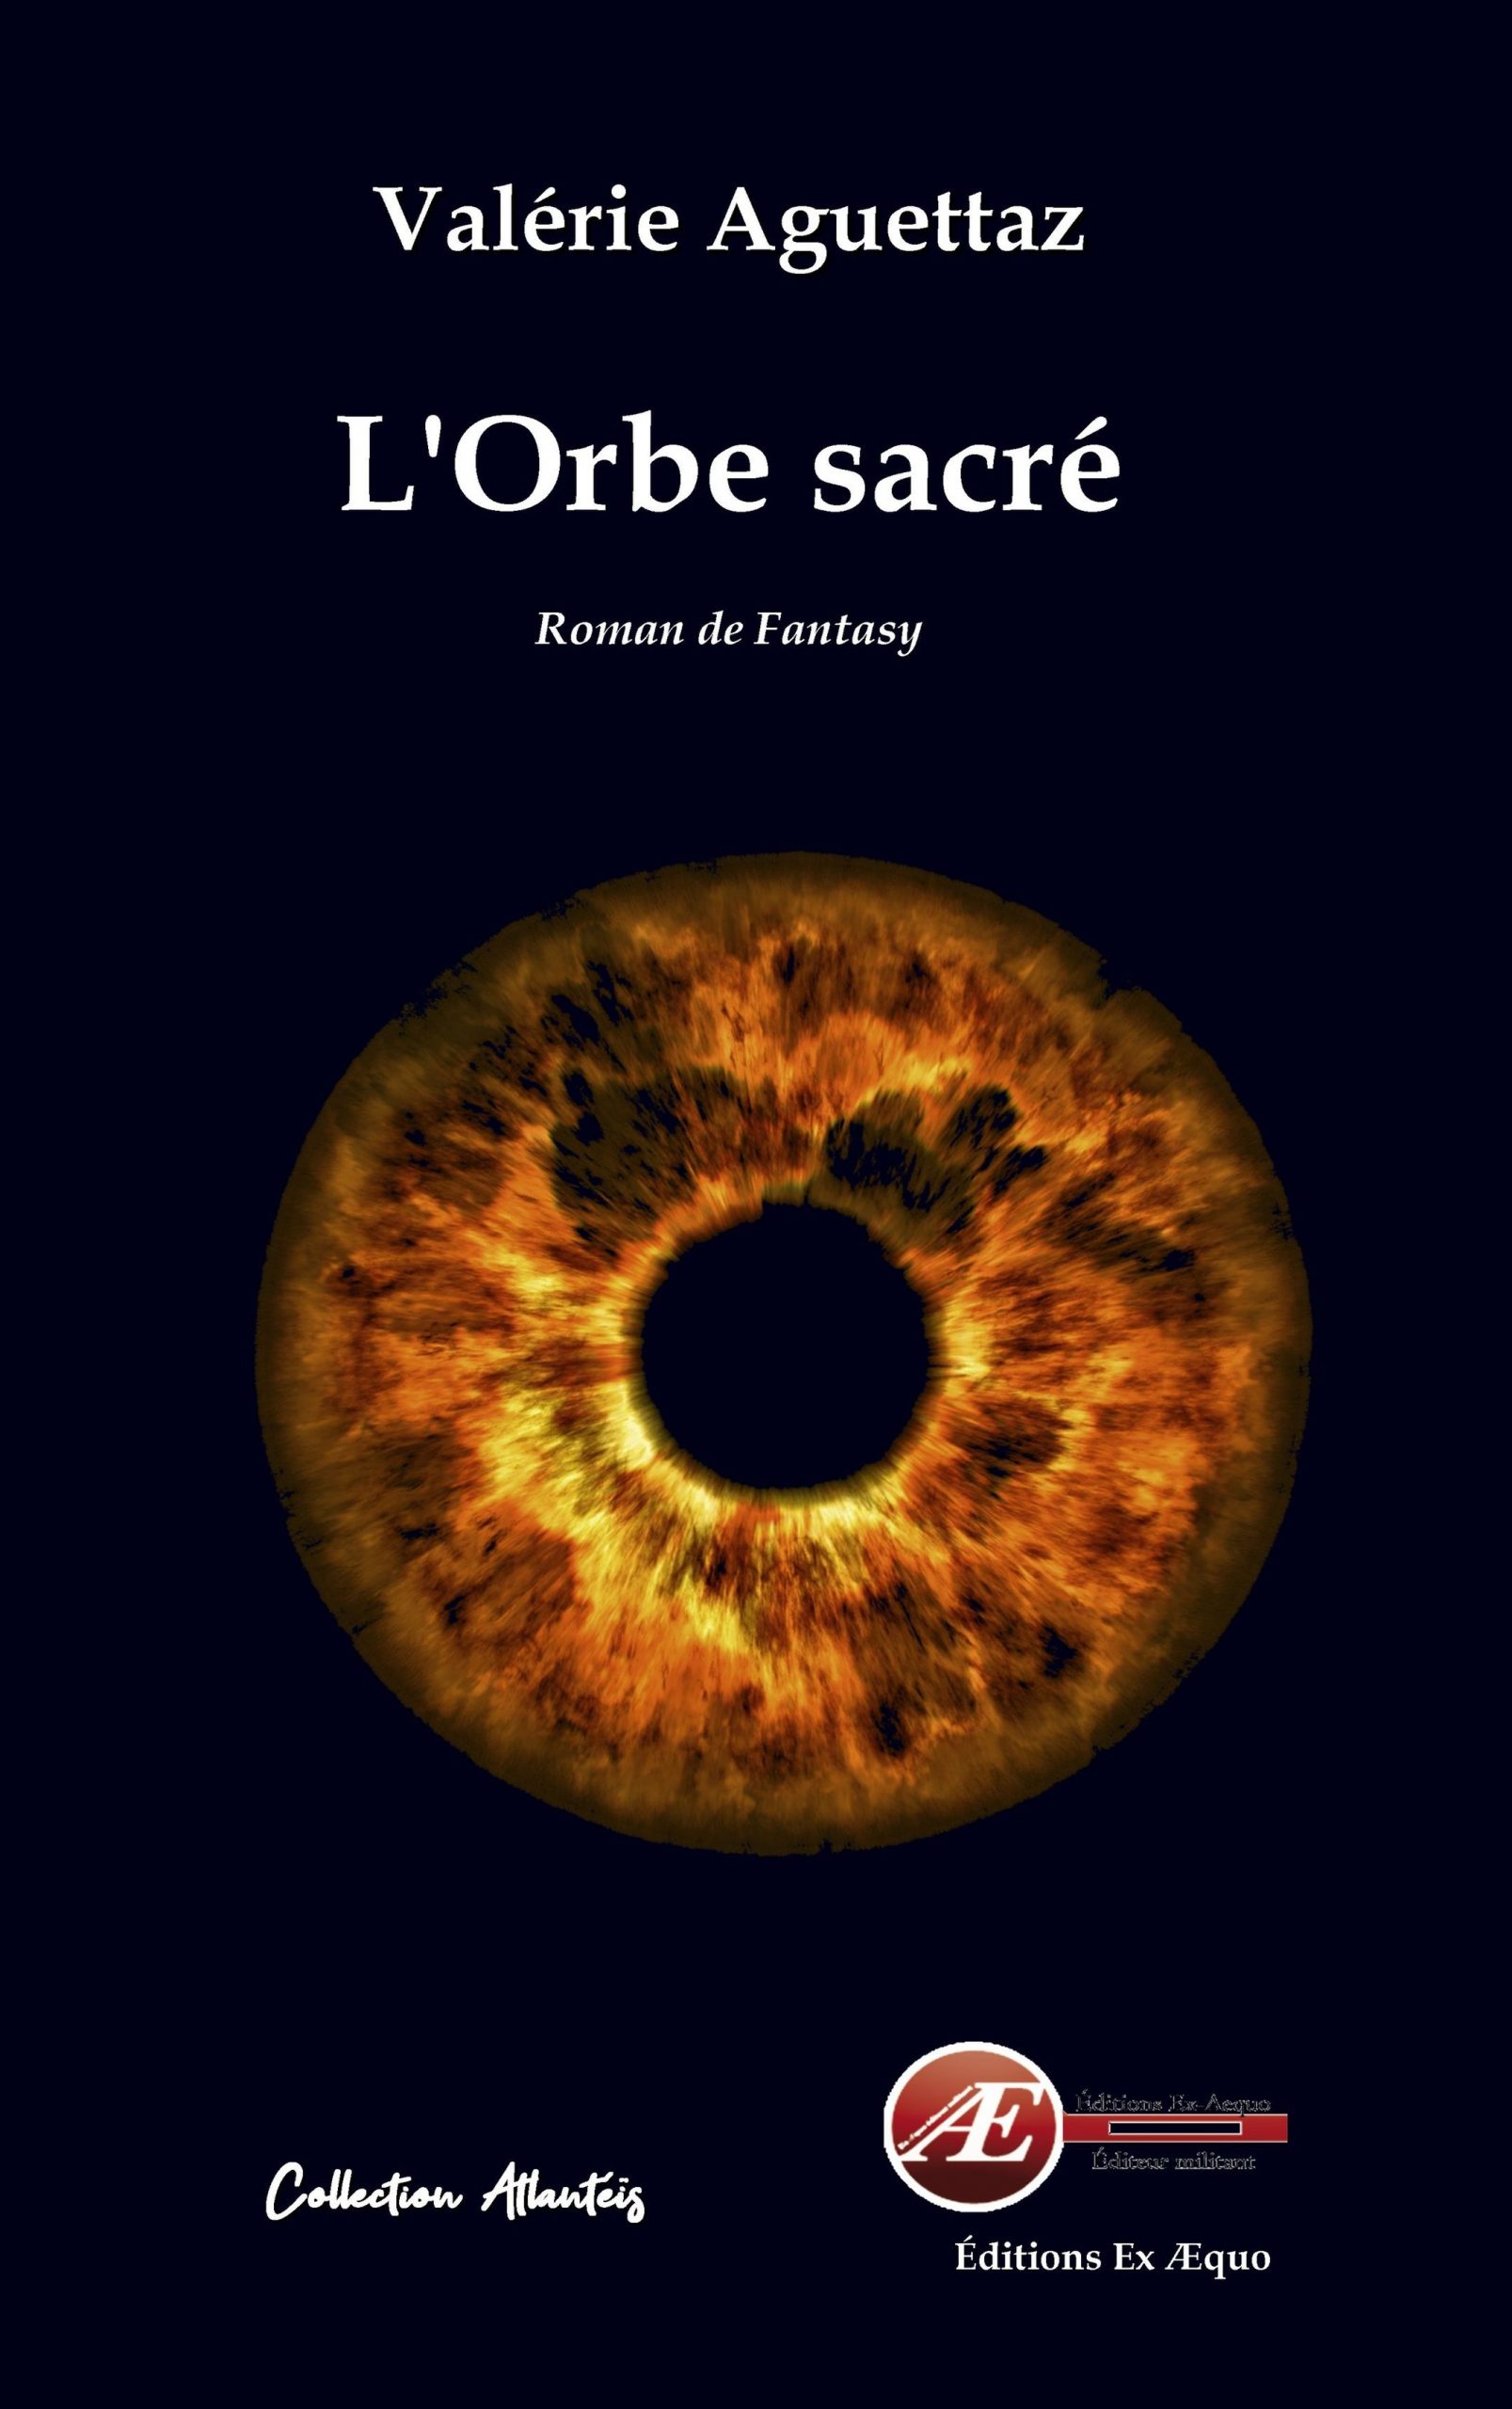 You are currently viewing L’orbe sacré, de Valérie Aguettaz